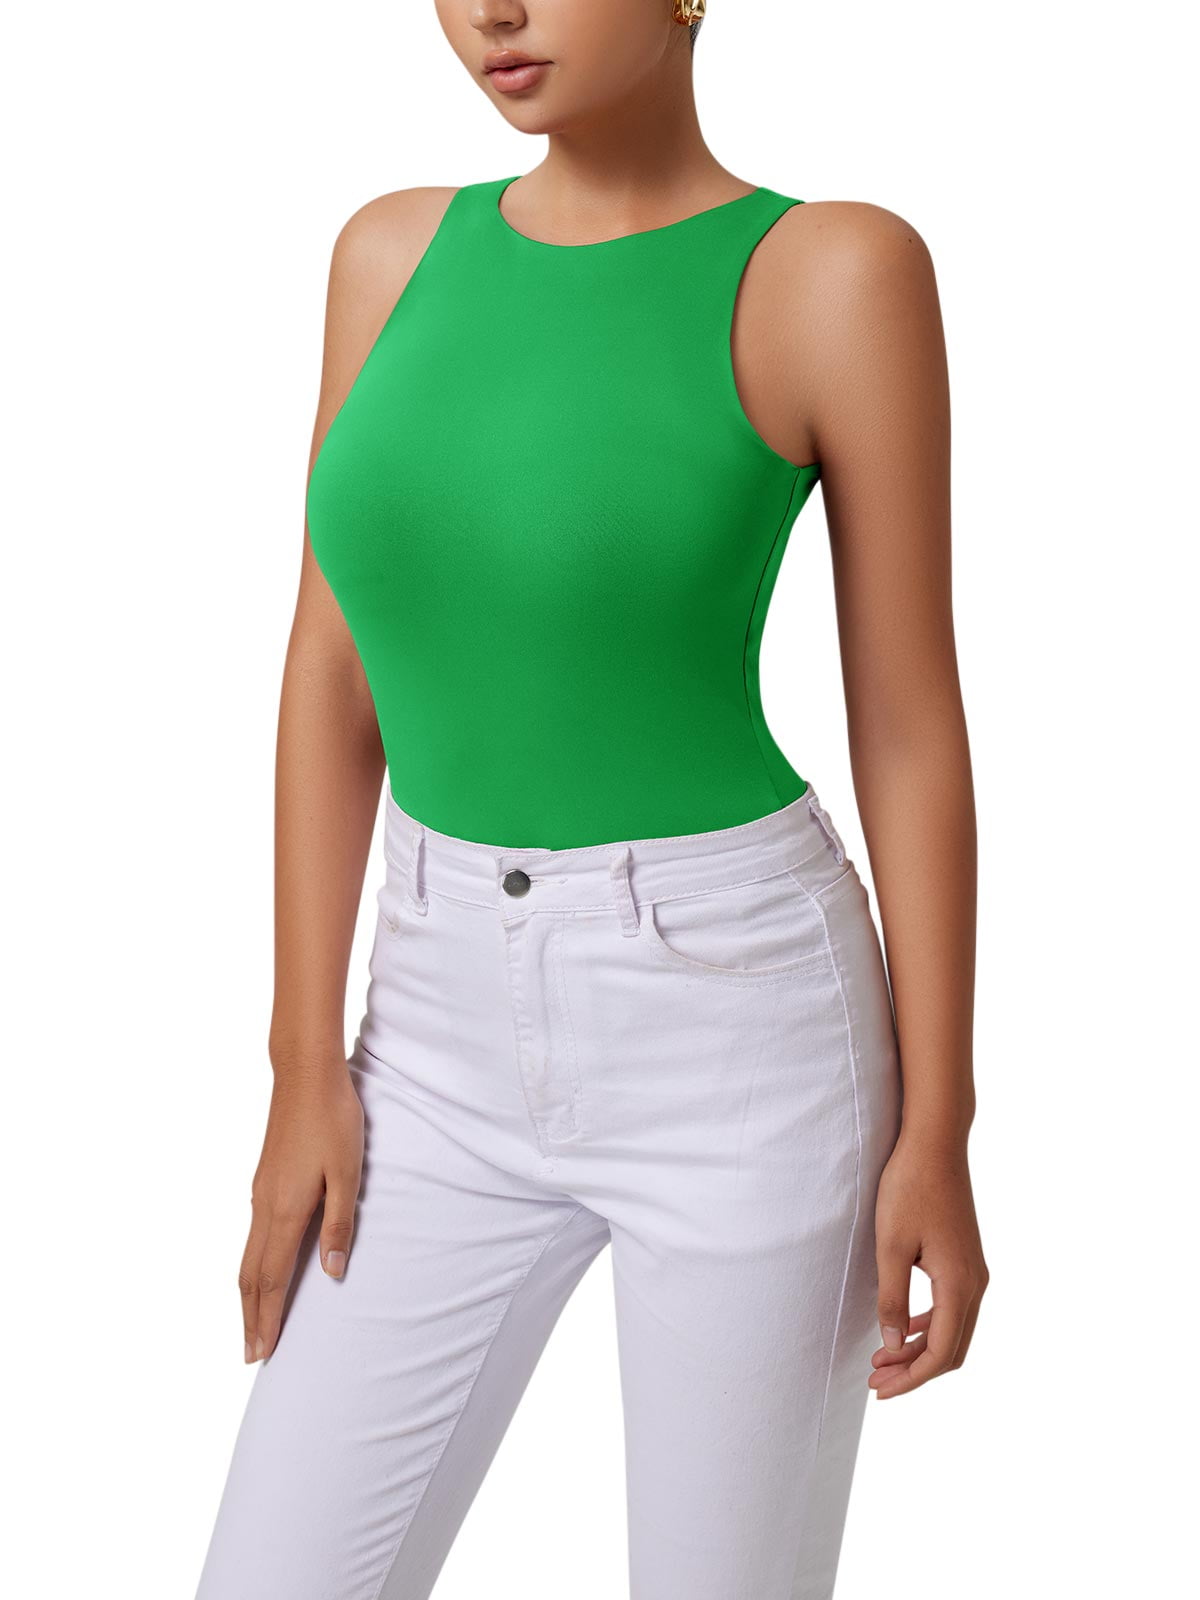 Vafful Bodysuit for Women Summer Tank Tops Scoop Square Neck Sleeveless  Shirts Women's Ribbed Basic Tops Jumpsuits Dark Green S-XL